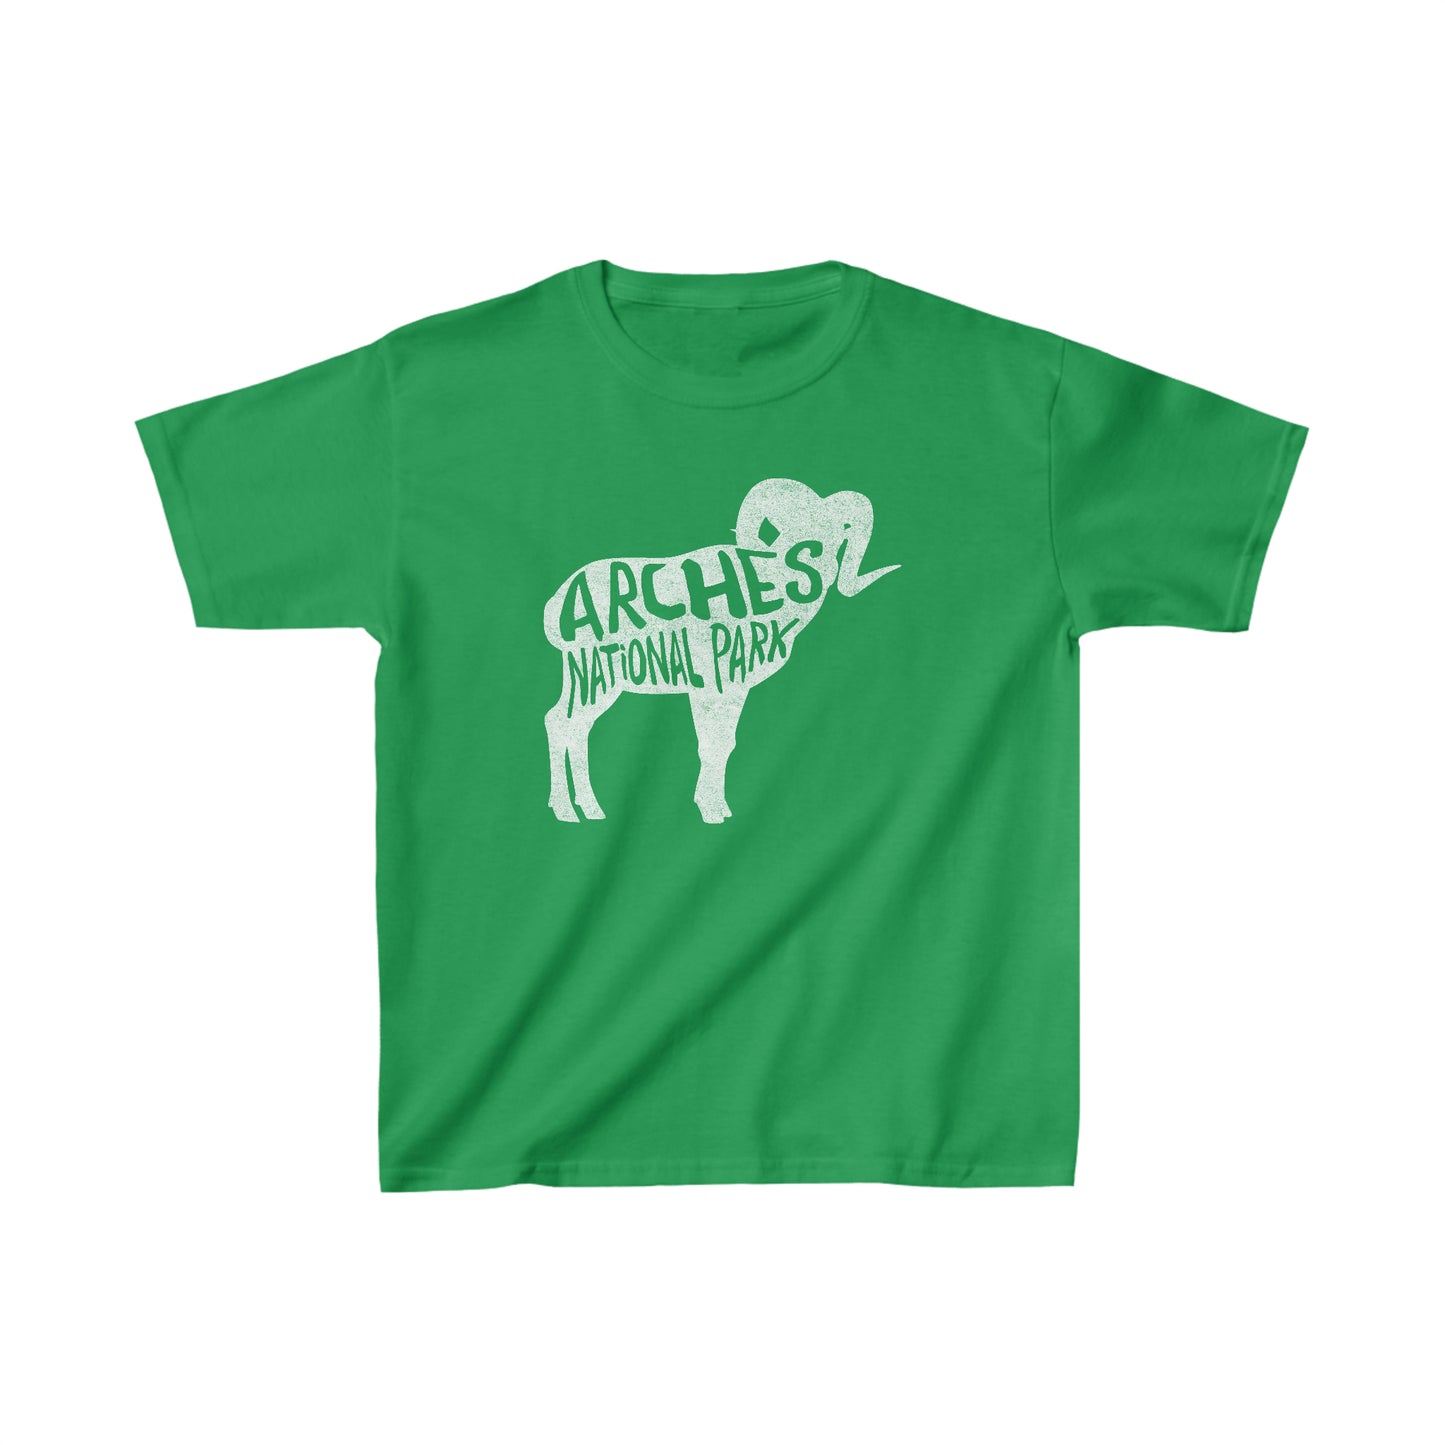 Arches National Park Child T-Shirt - Bighorn Sheep